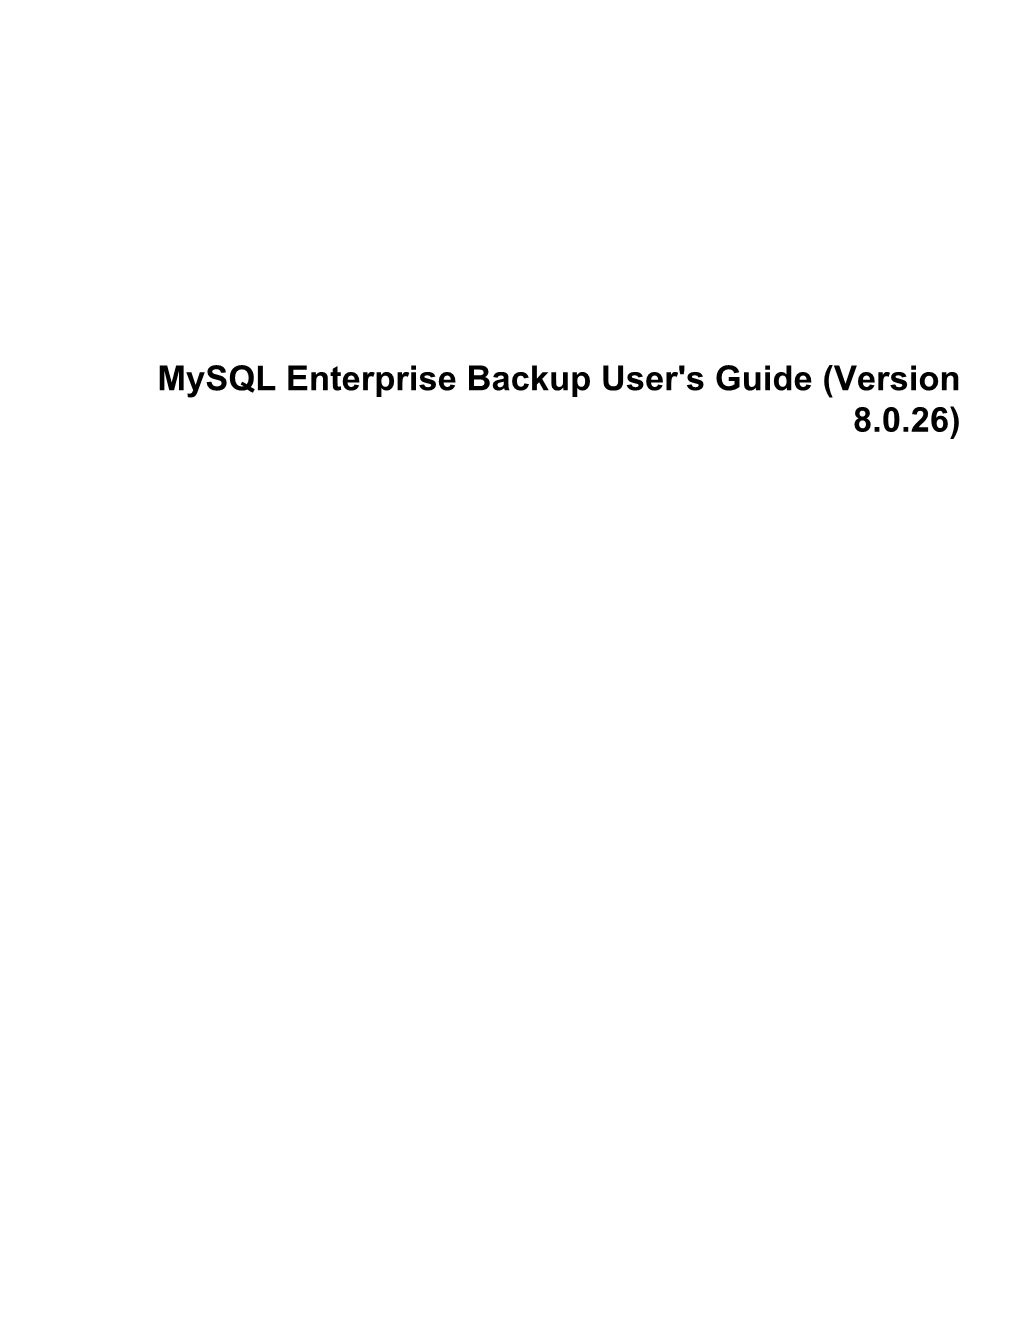 Mysql Enterprise Backup User's Guide (Version 8.0.26) Abstract